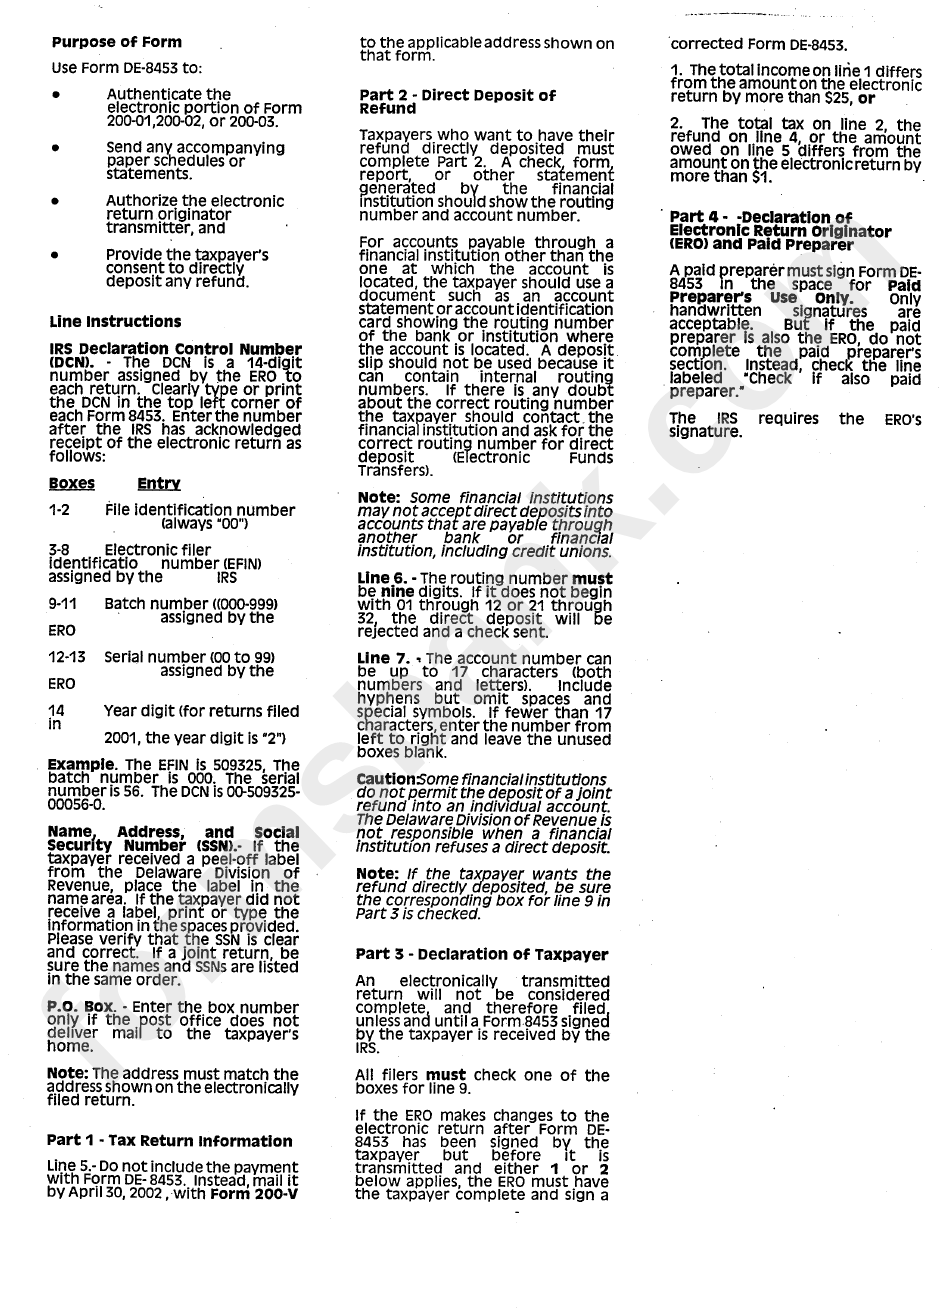 Instructions For Form De-8453 - Delaware Division Of Revenue - 2001-2002